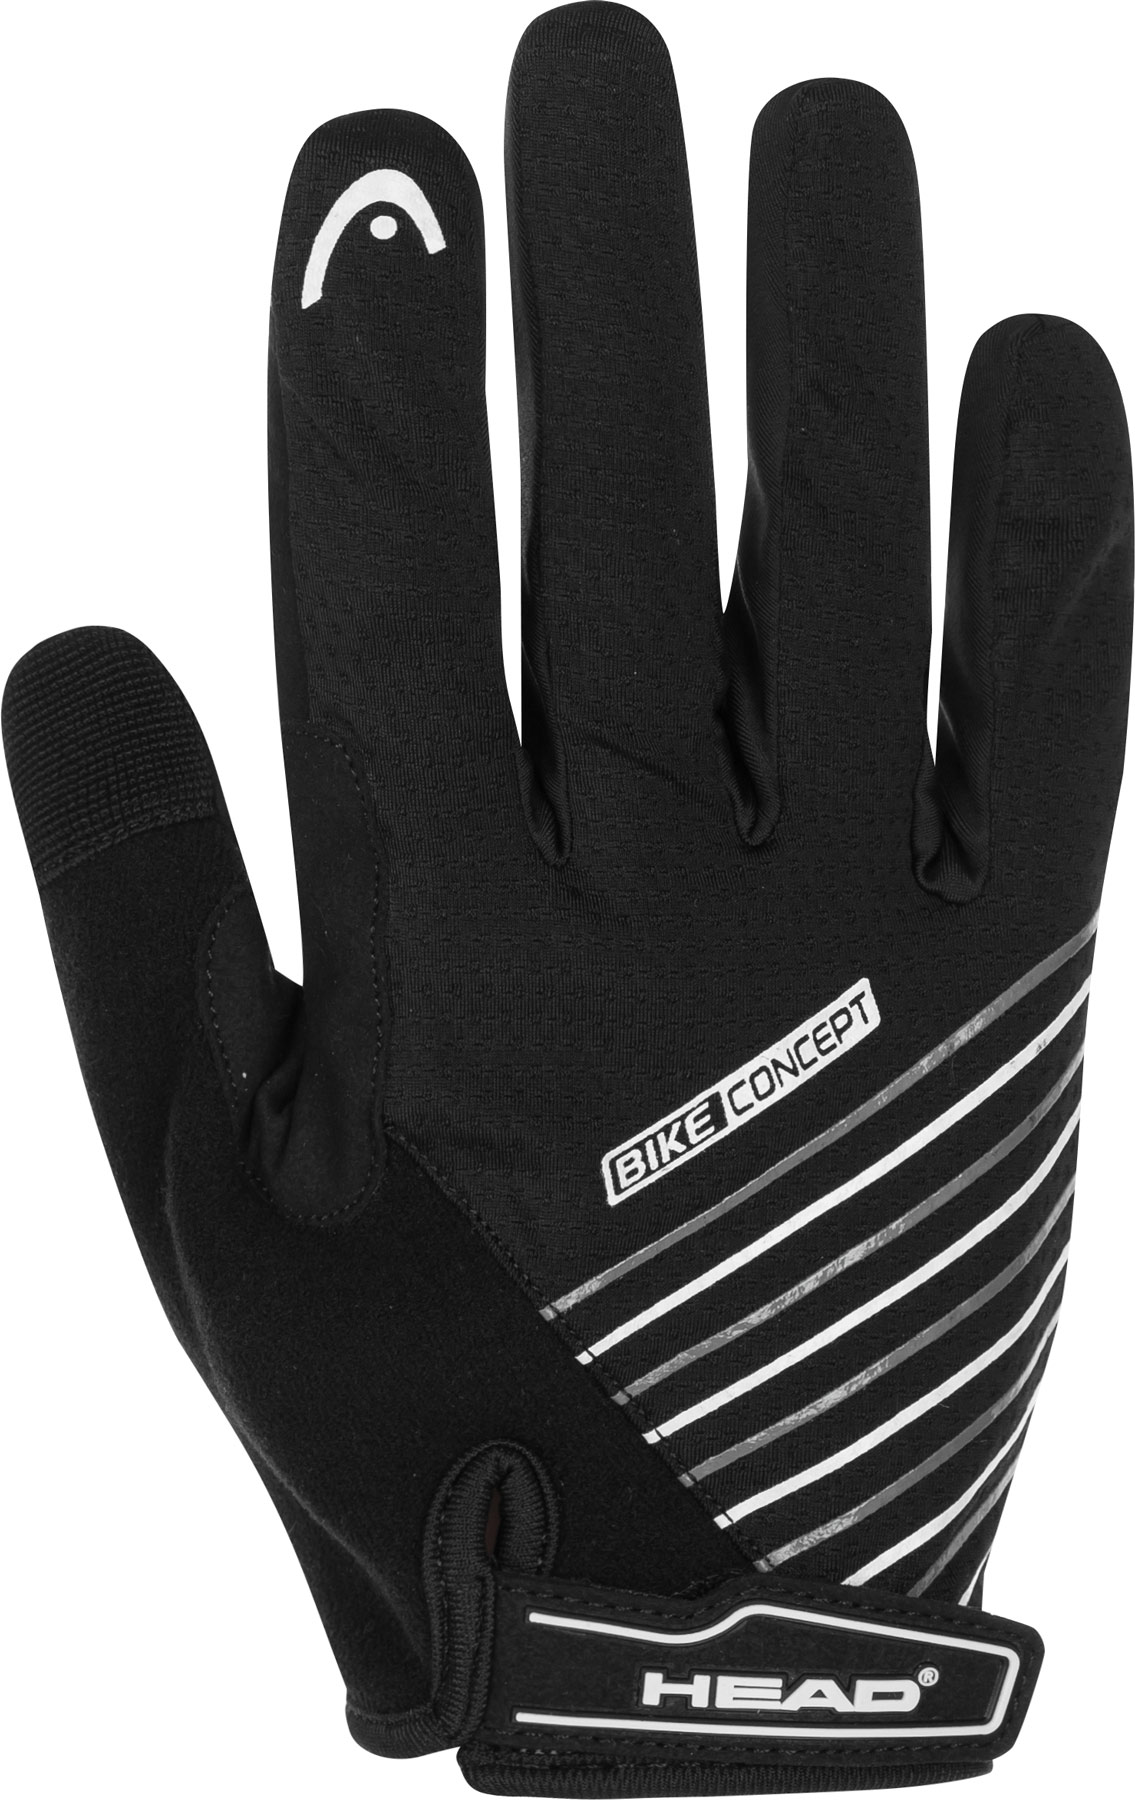 Men's long cycling gloves